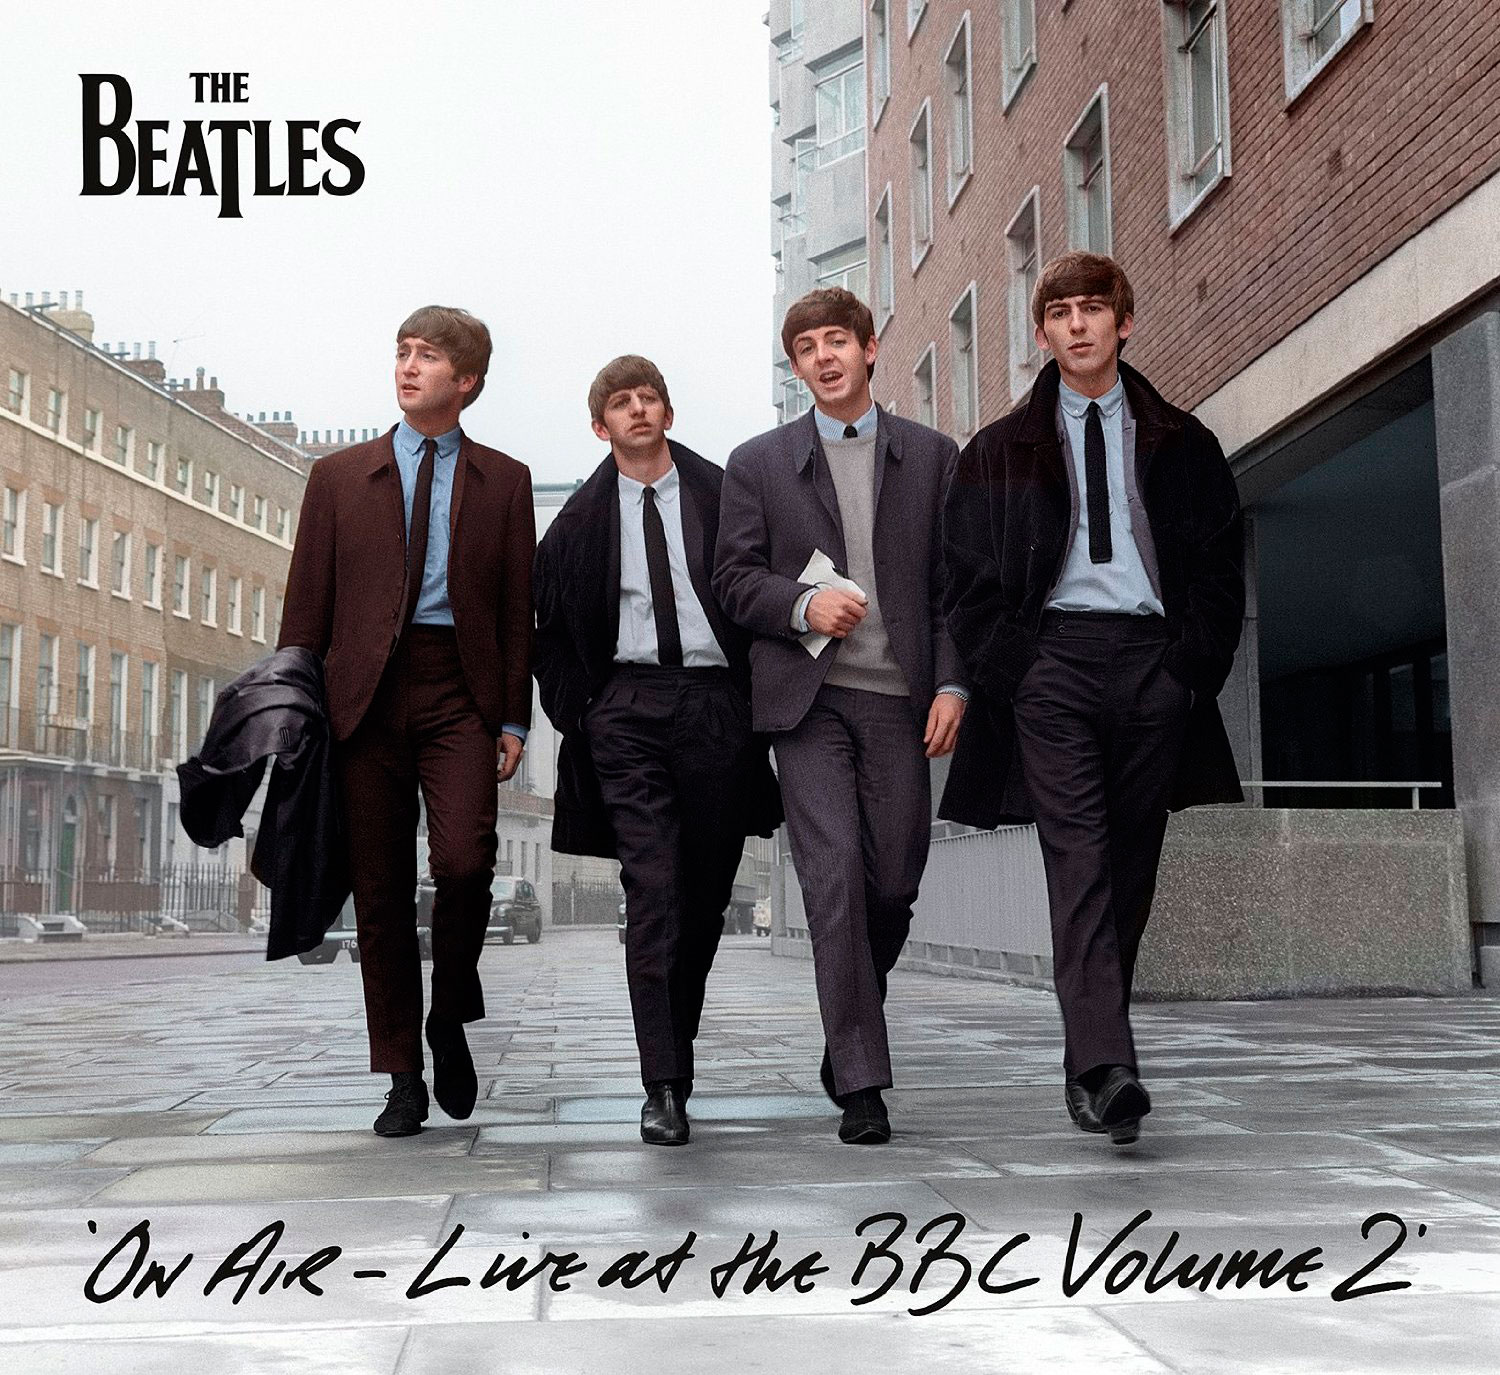 The Beatles: On air - Live at the BBC Volume 2, la portada del disco